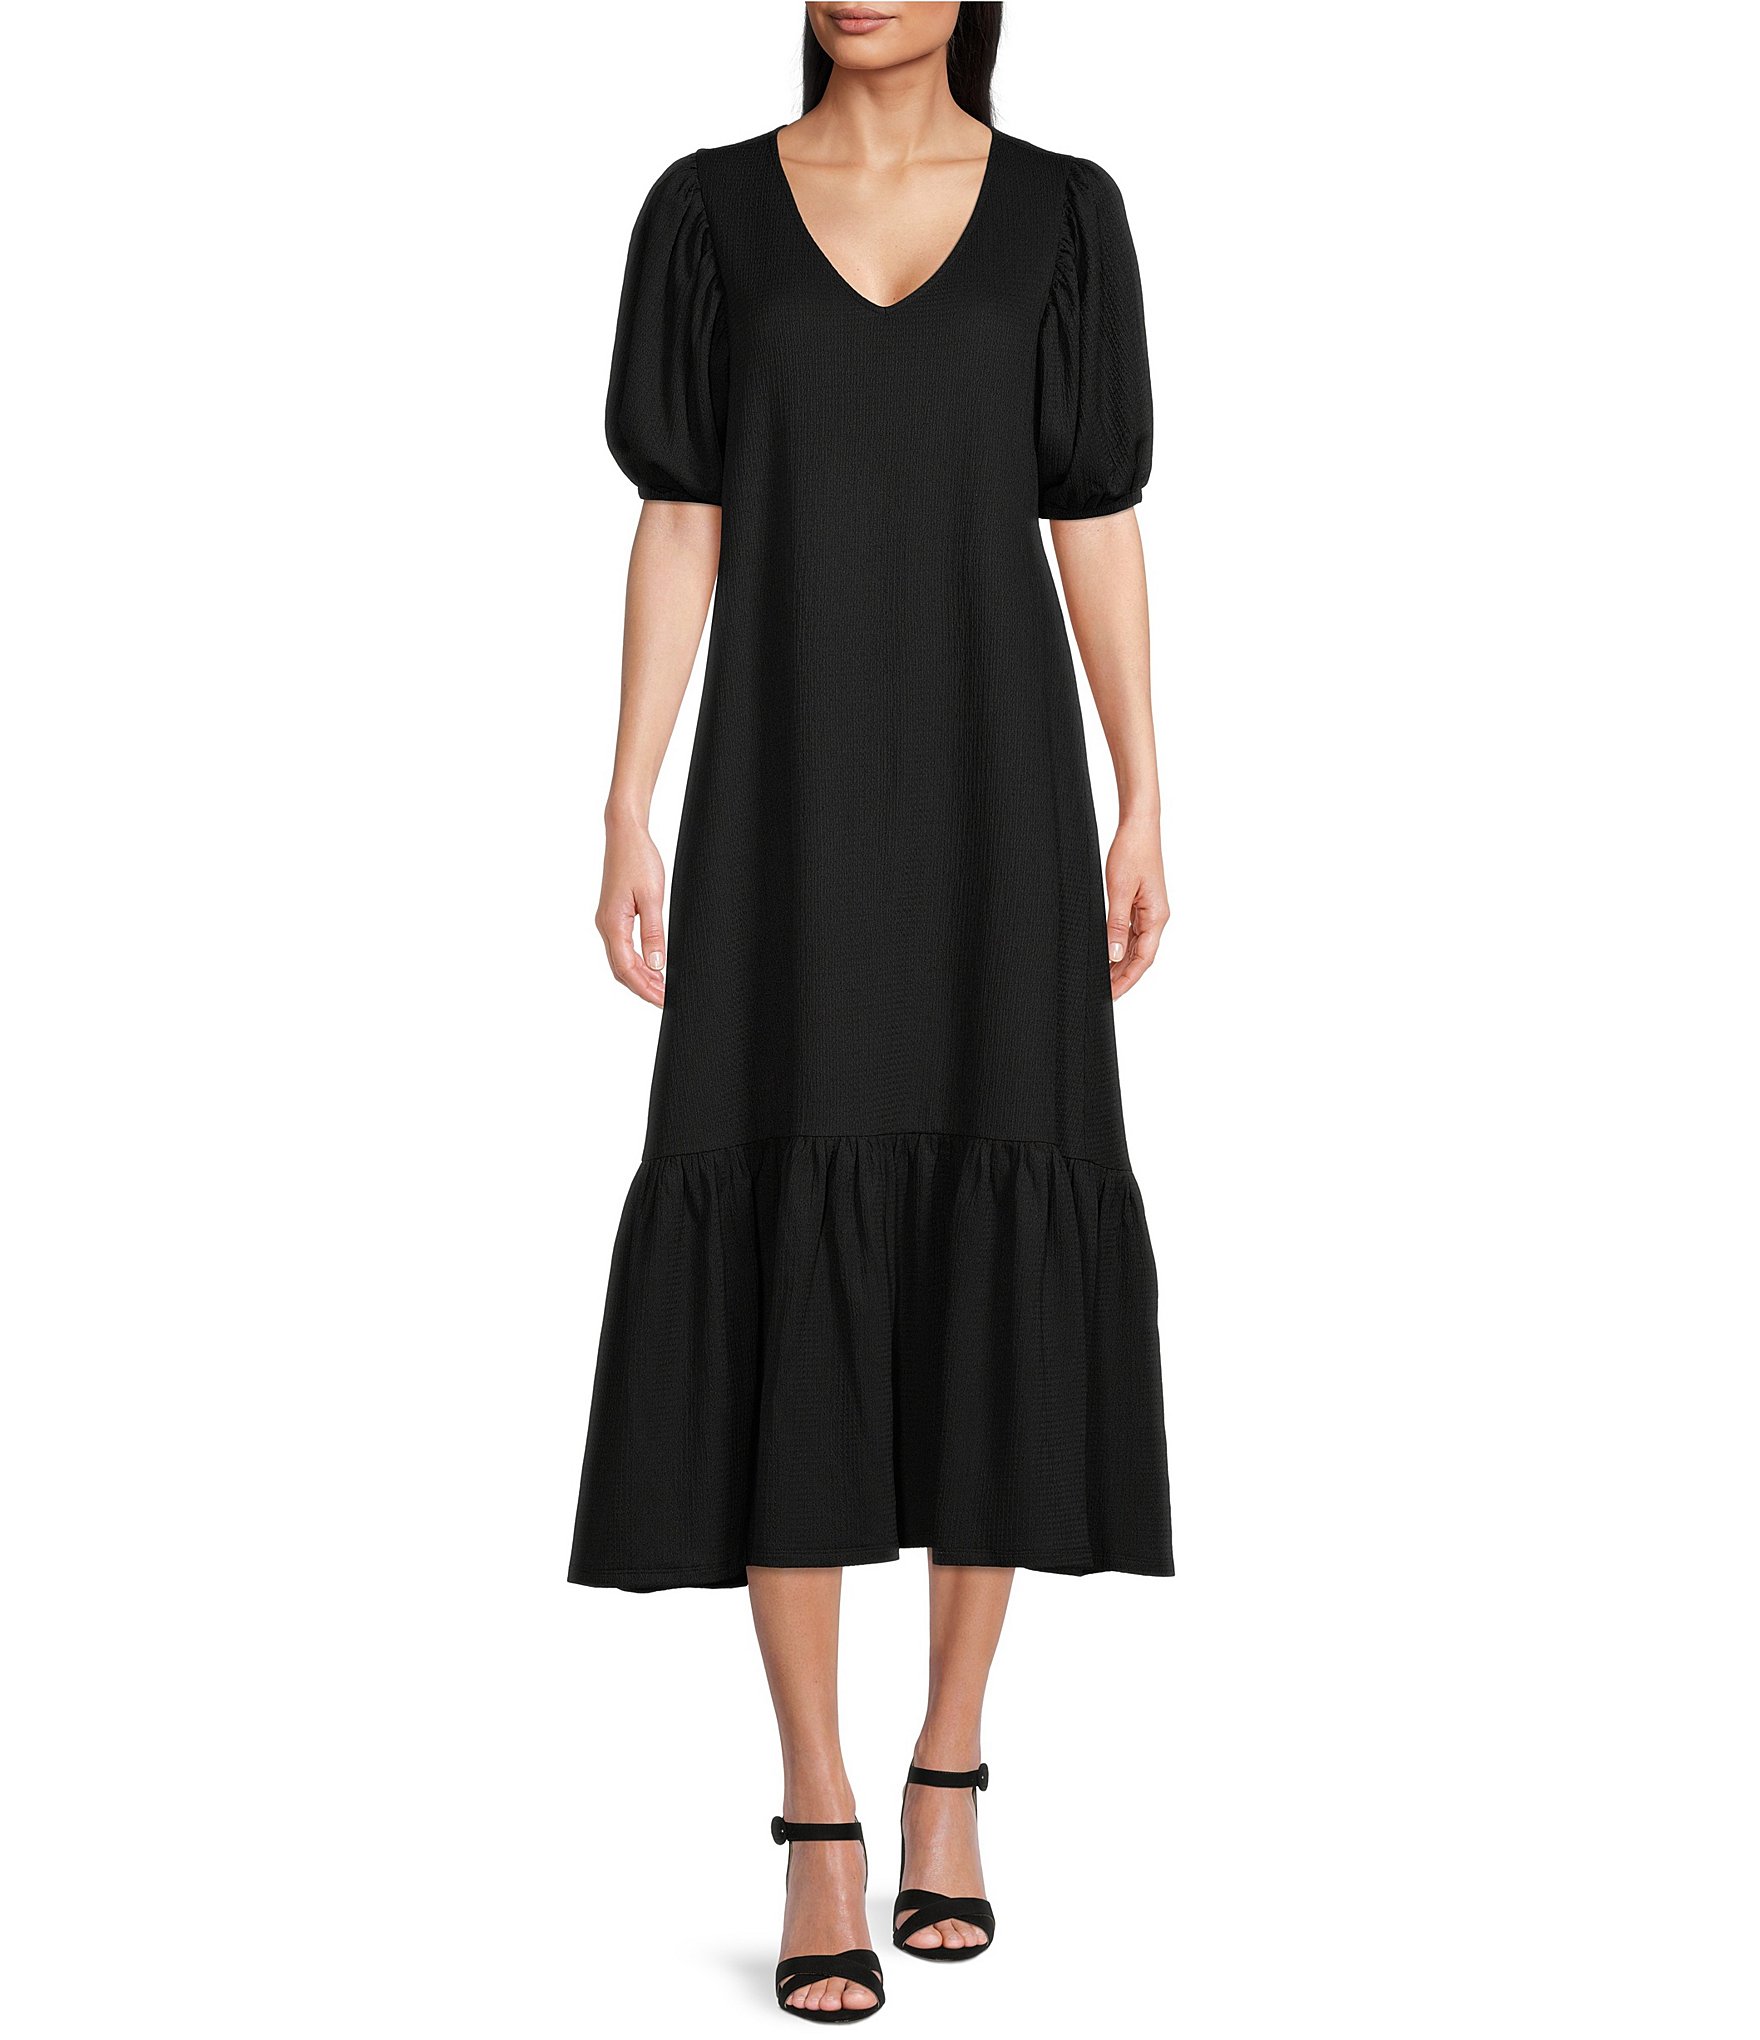 Women's V-Neck Midi Dresses | Dillards.com